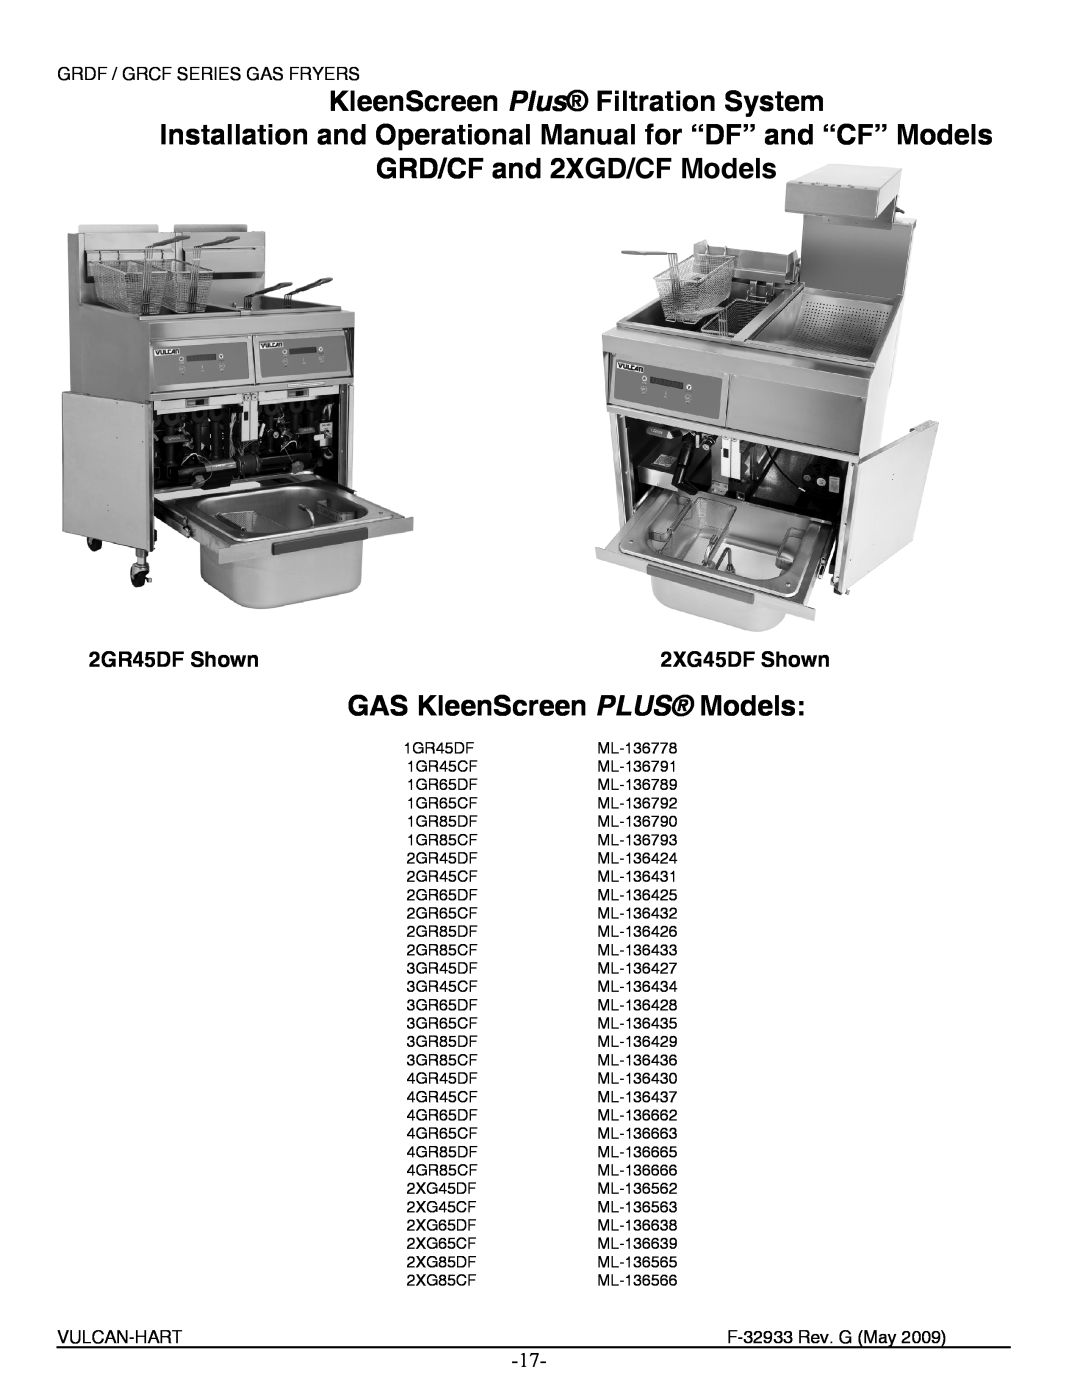 Vulcan-Hart 2GR45CF ML-136431 KleenScreen Plus Filtration System, GRD/CF and 2XGD/CF Models, GAS KleenScreen PLUS Models 